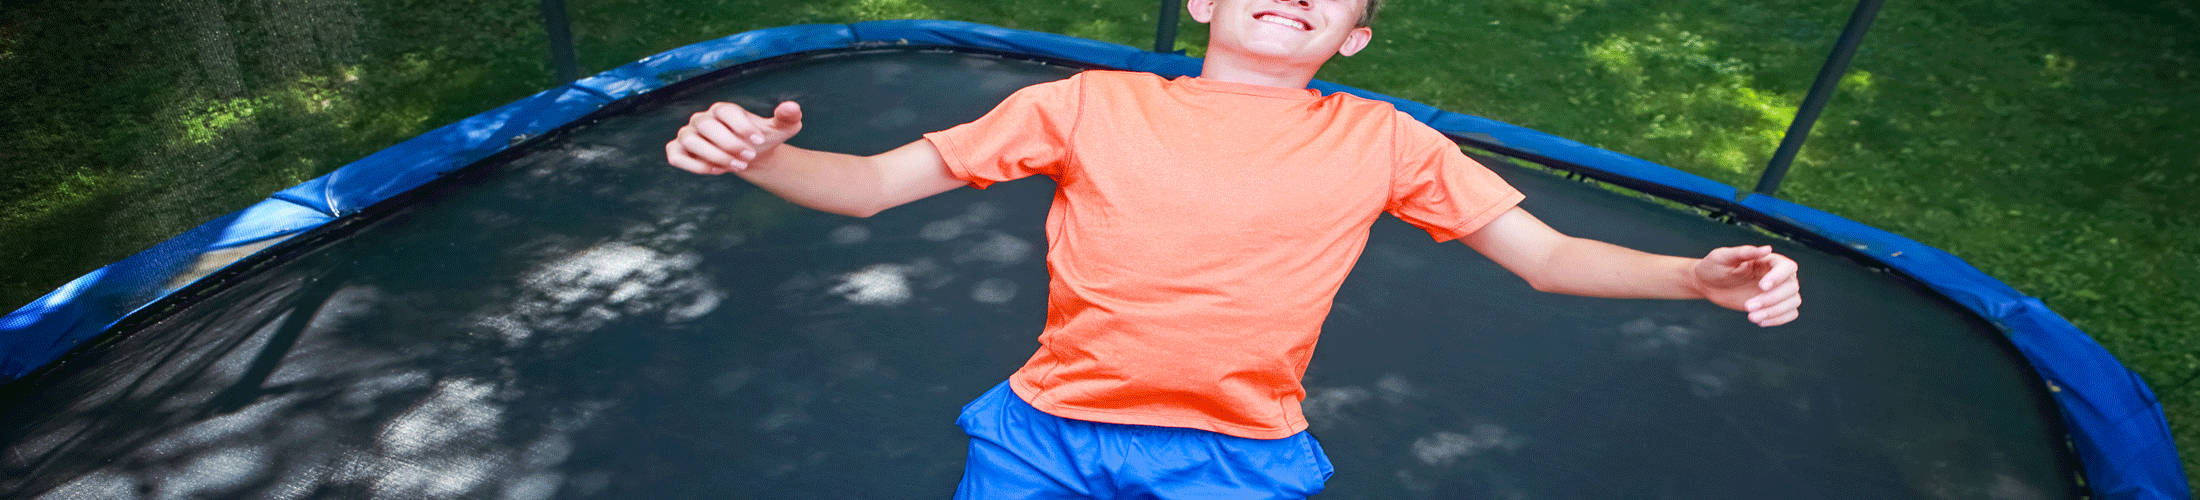 Boy on trampoline